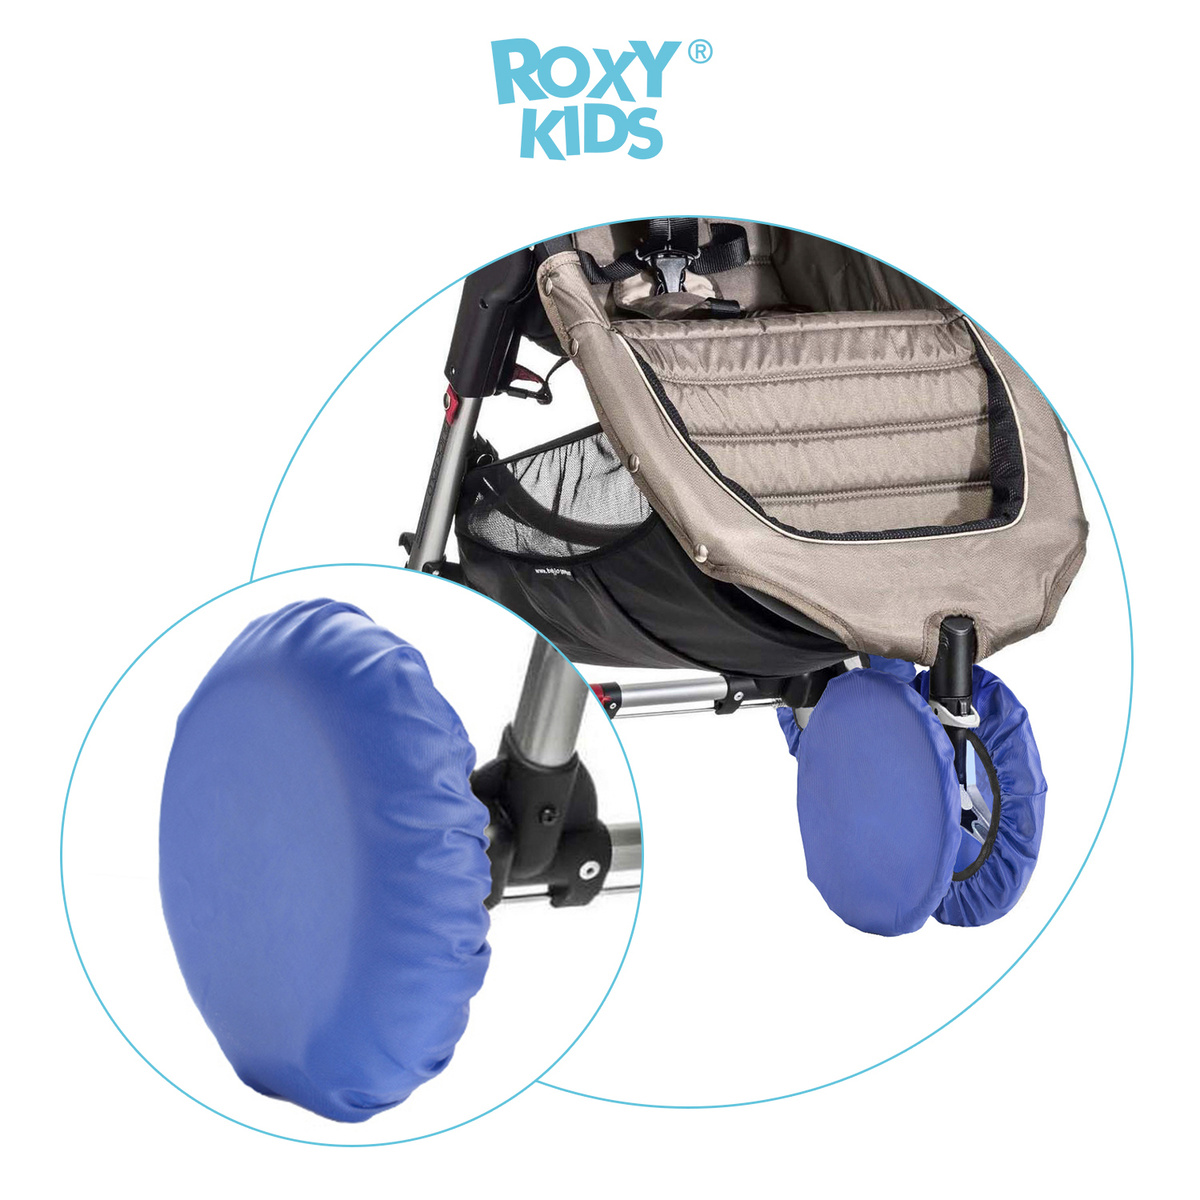 Чехлы на колеса для детской коляски на резинке, грязеотталкивающие, диаметр до 25 см от ROXY-KIDS, 4 #1